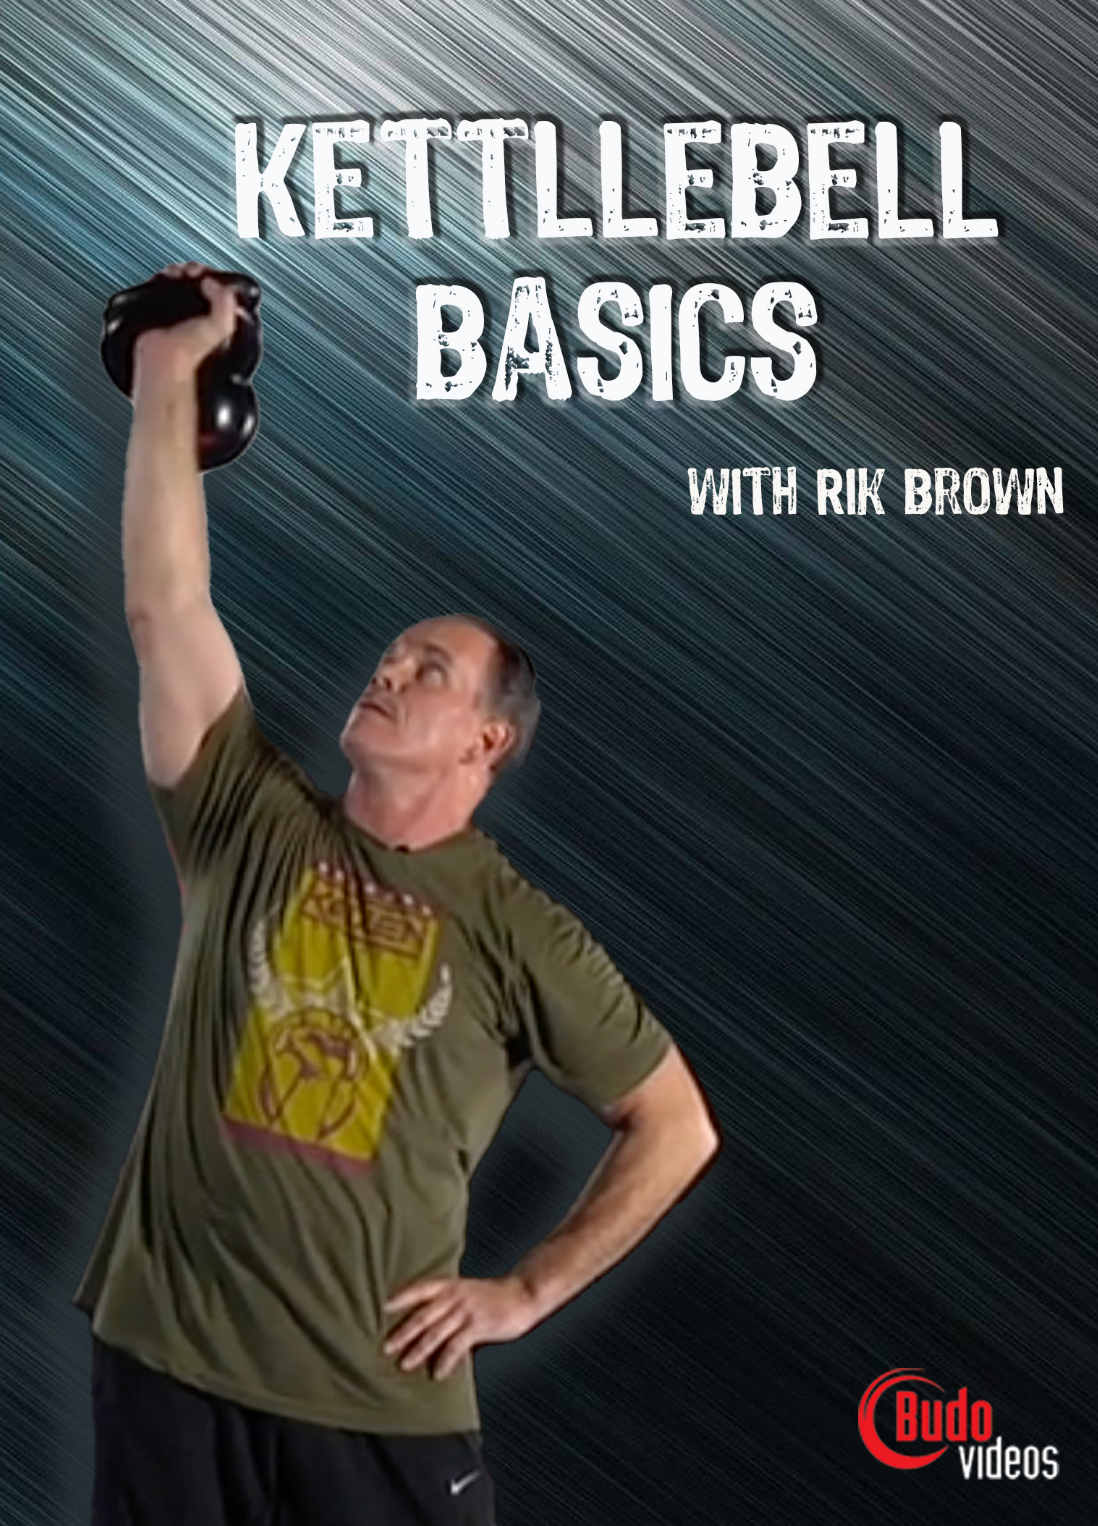 Kettllebell Basics DVD with Rik Brown